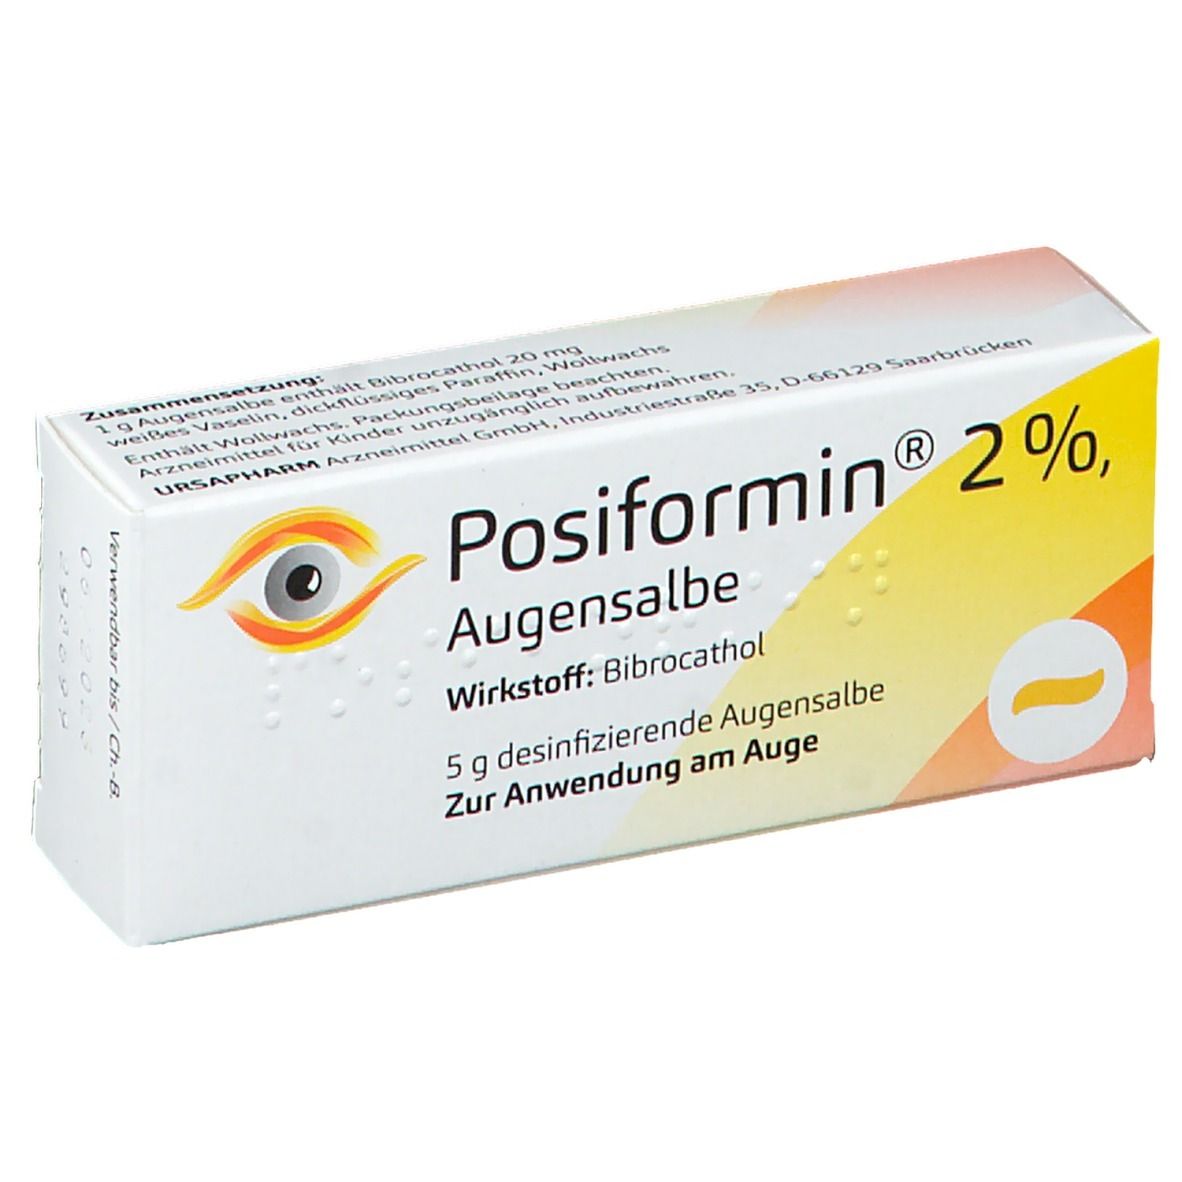 Posiformin 2%